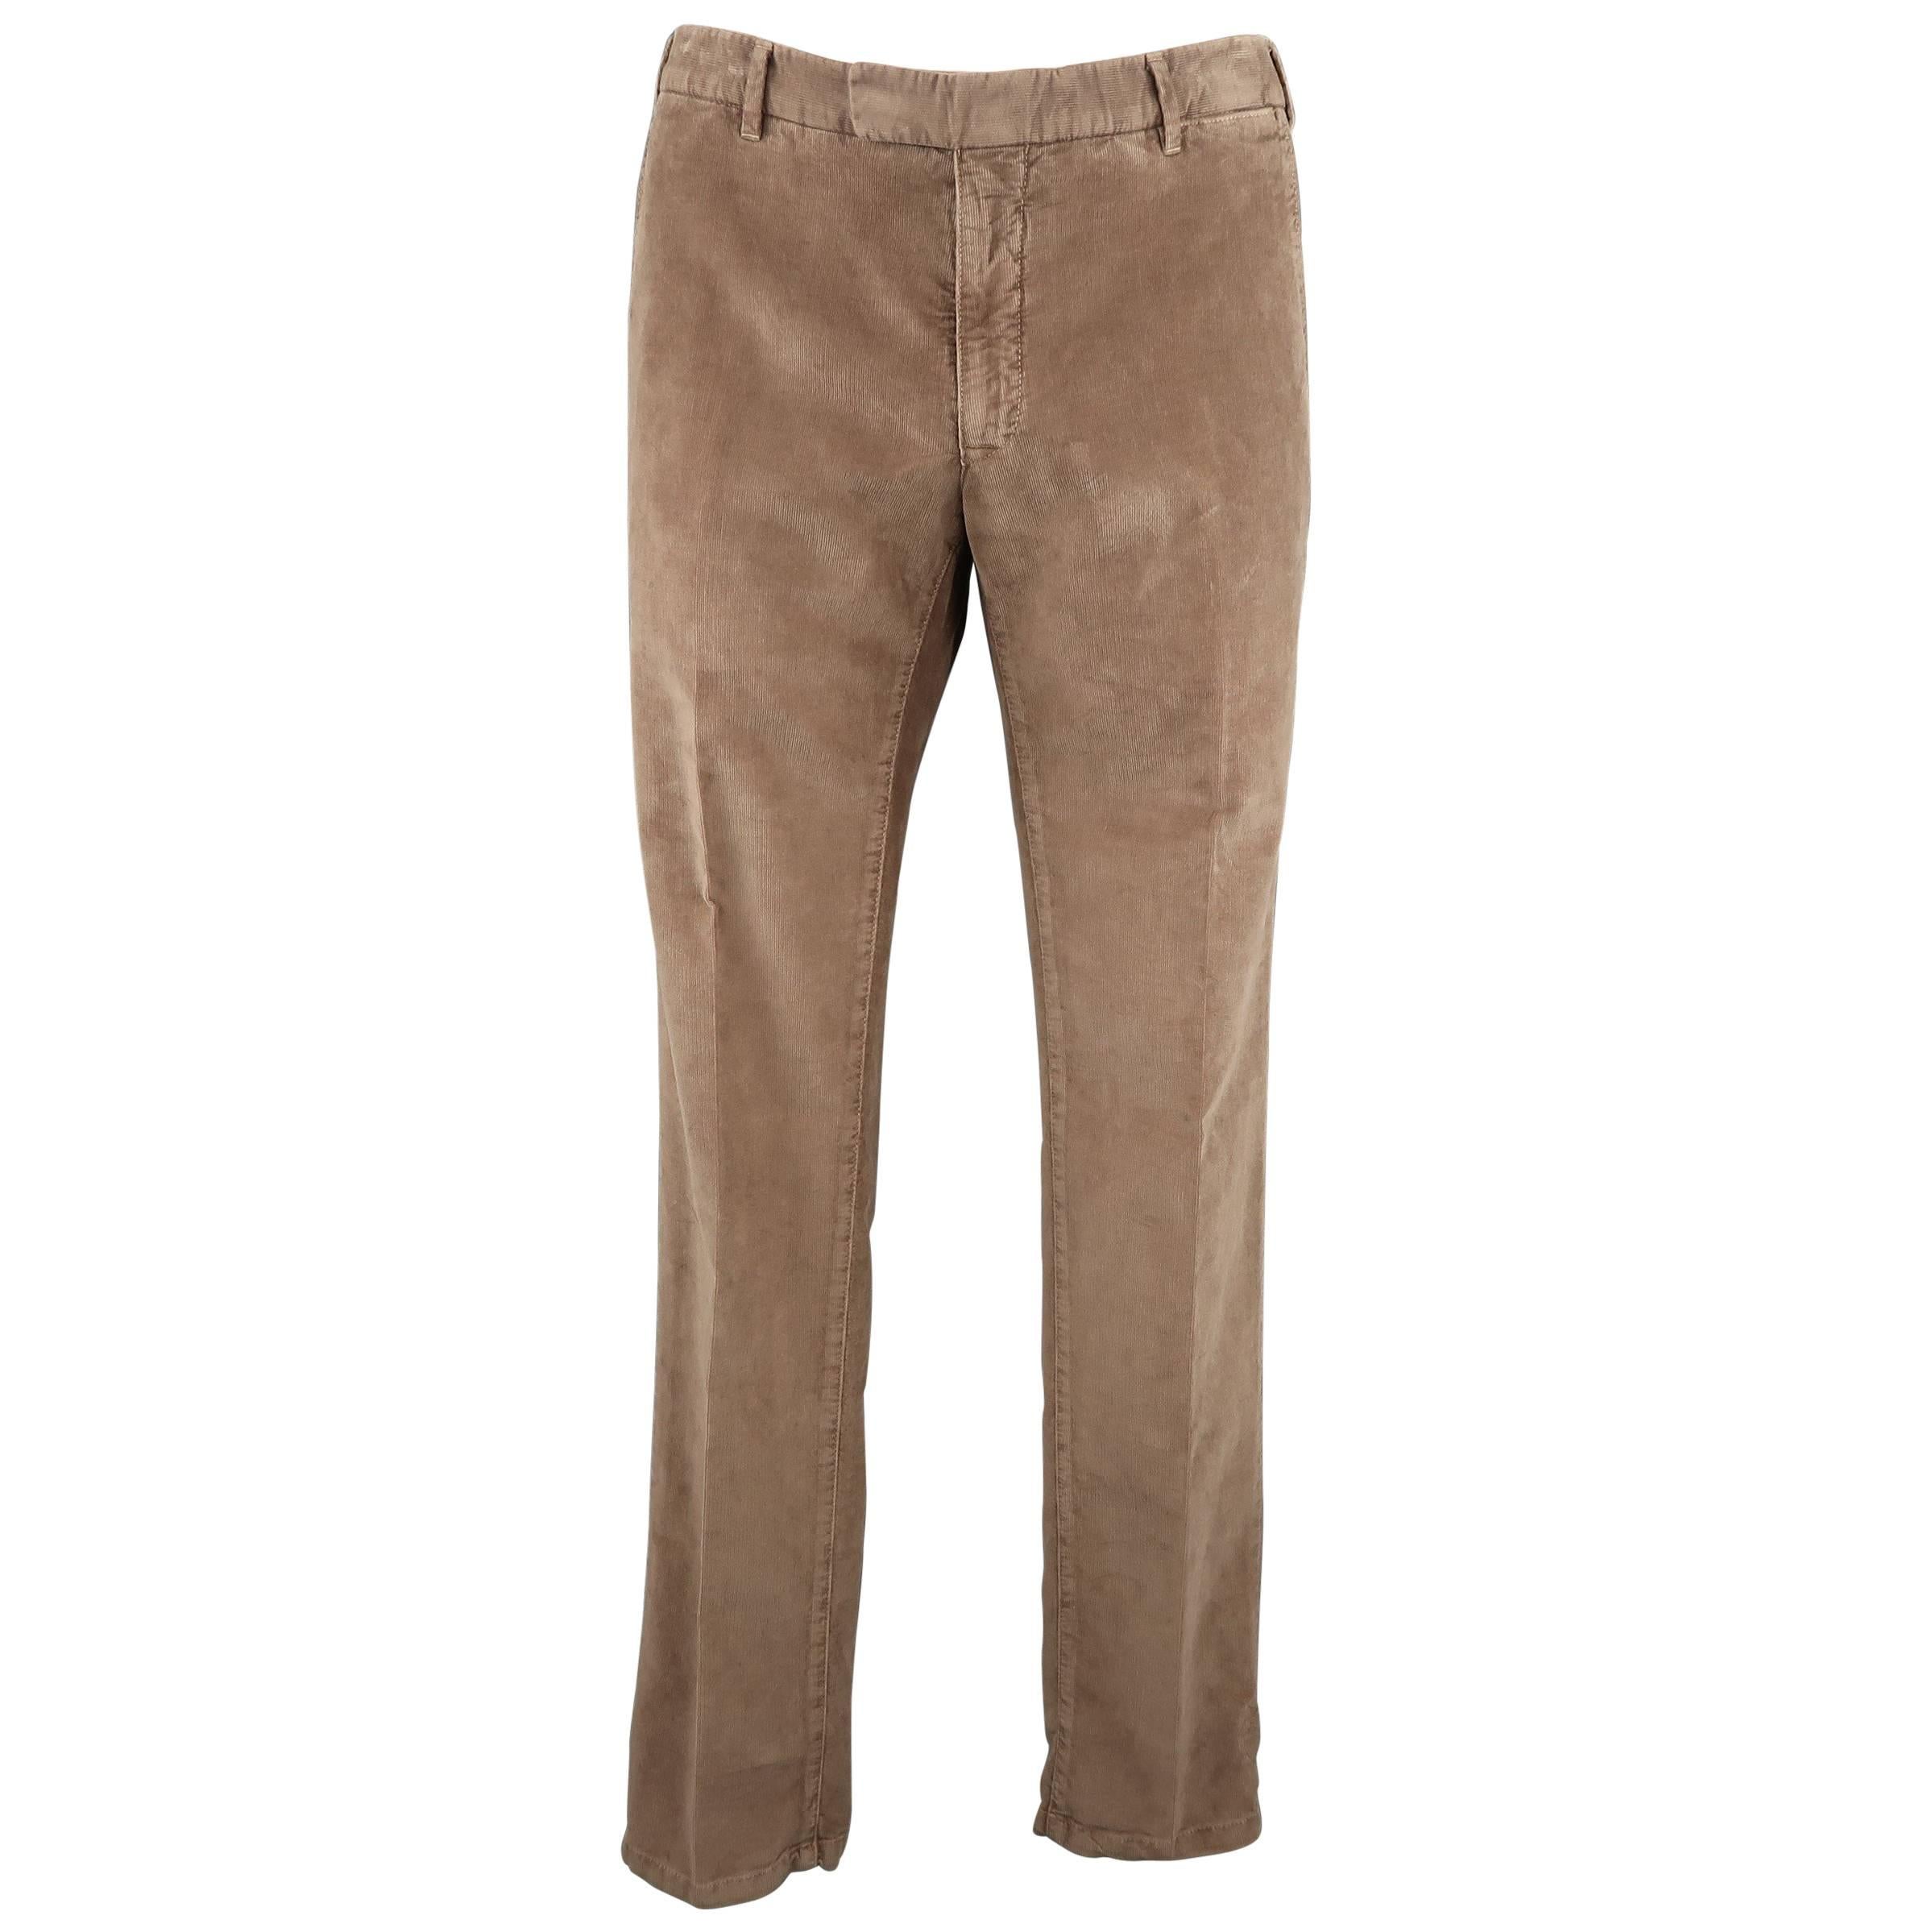 Men's BOGLIOLI Size 34 Tan Textured Corduroy Dress Pants